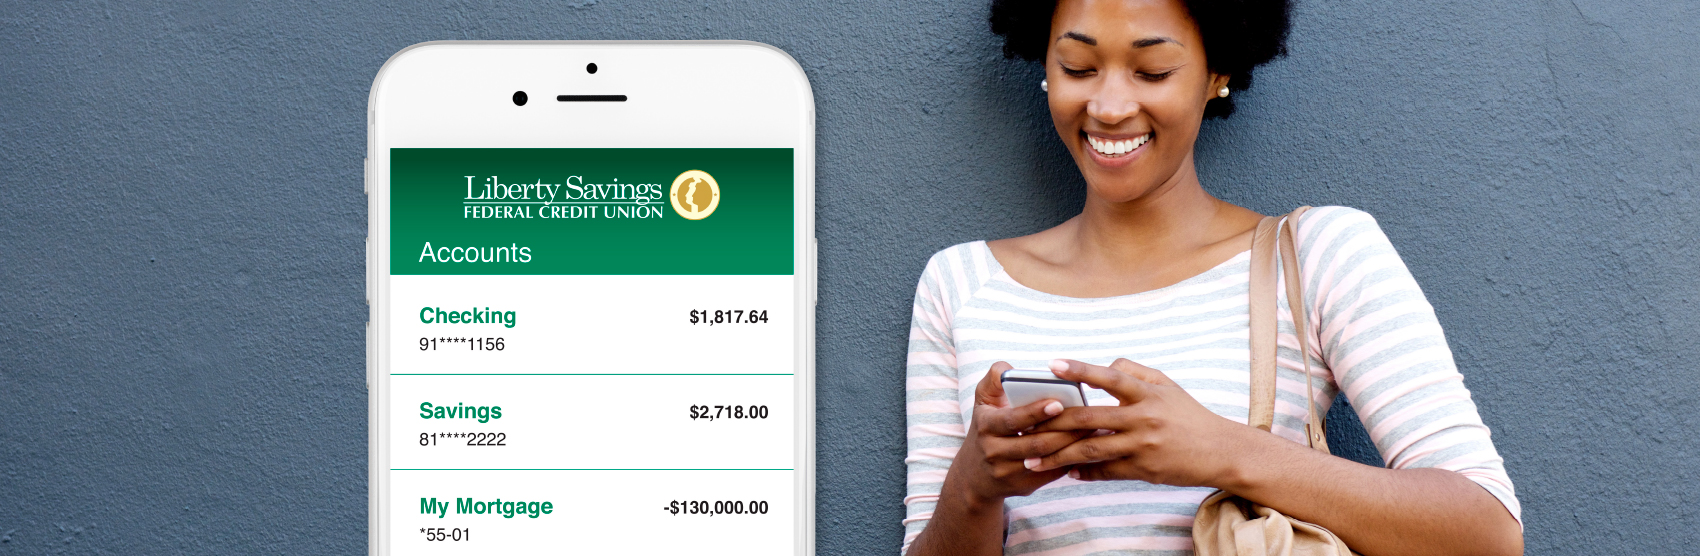 Mobile Banking – Liberty Savings Federal Credit Union